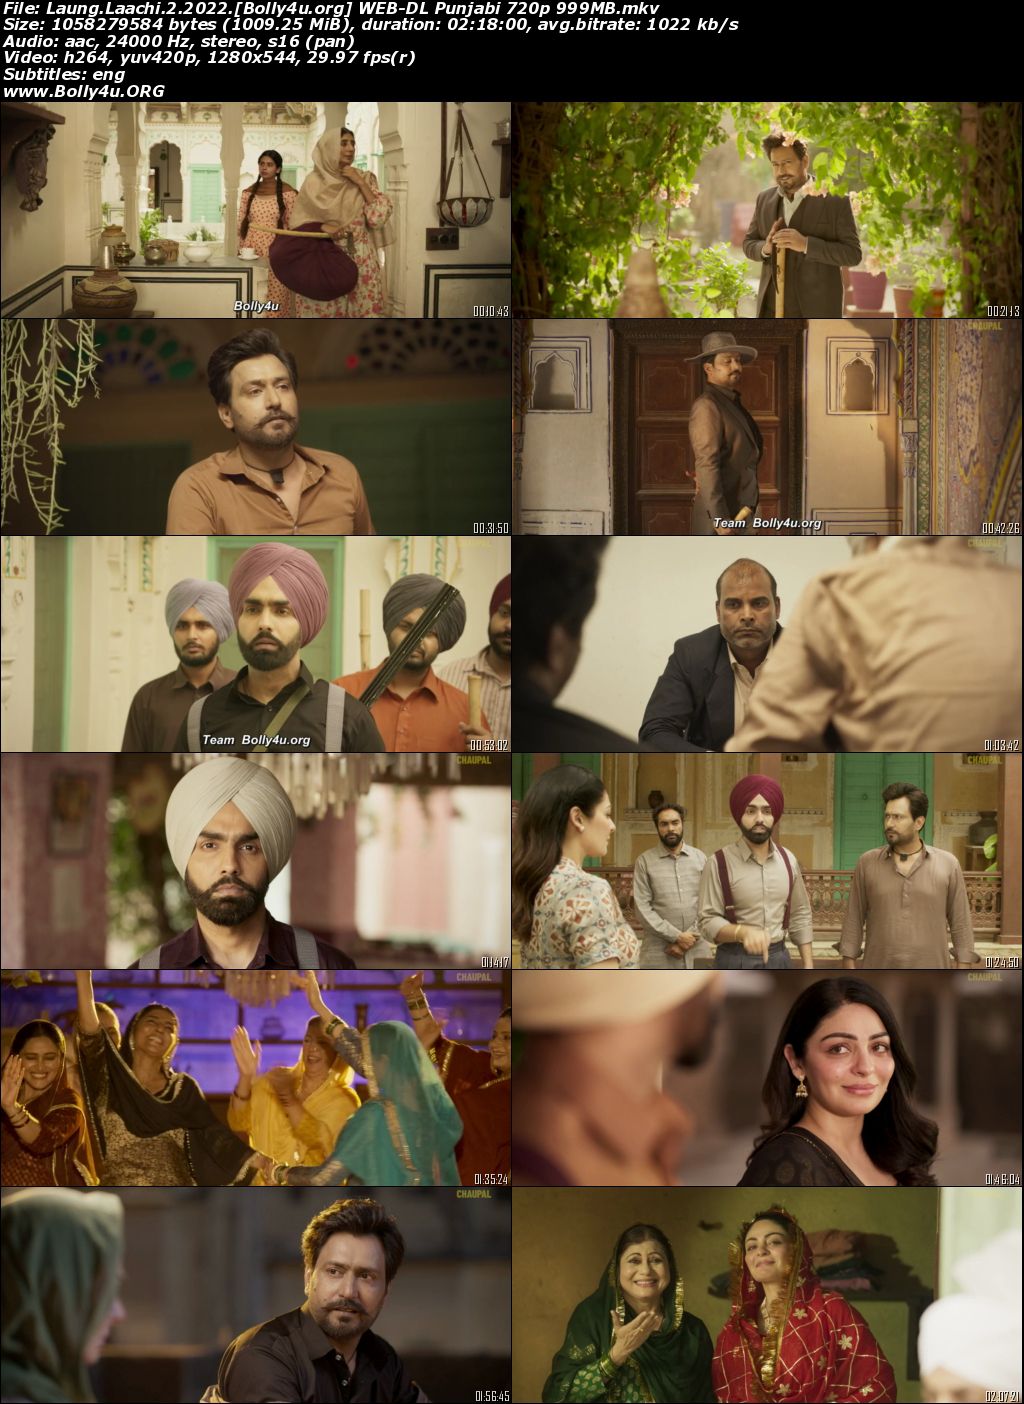 Laung Laachi 2 2022 WEB-DL Punjabi Full Movie Download 720p 480p